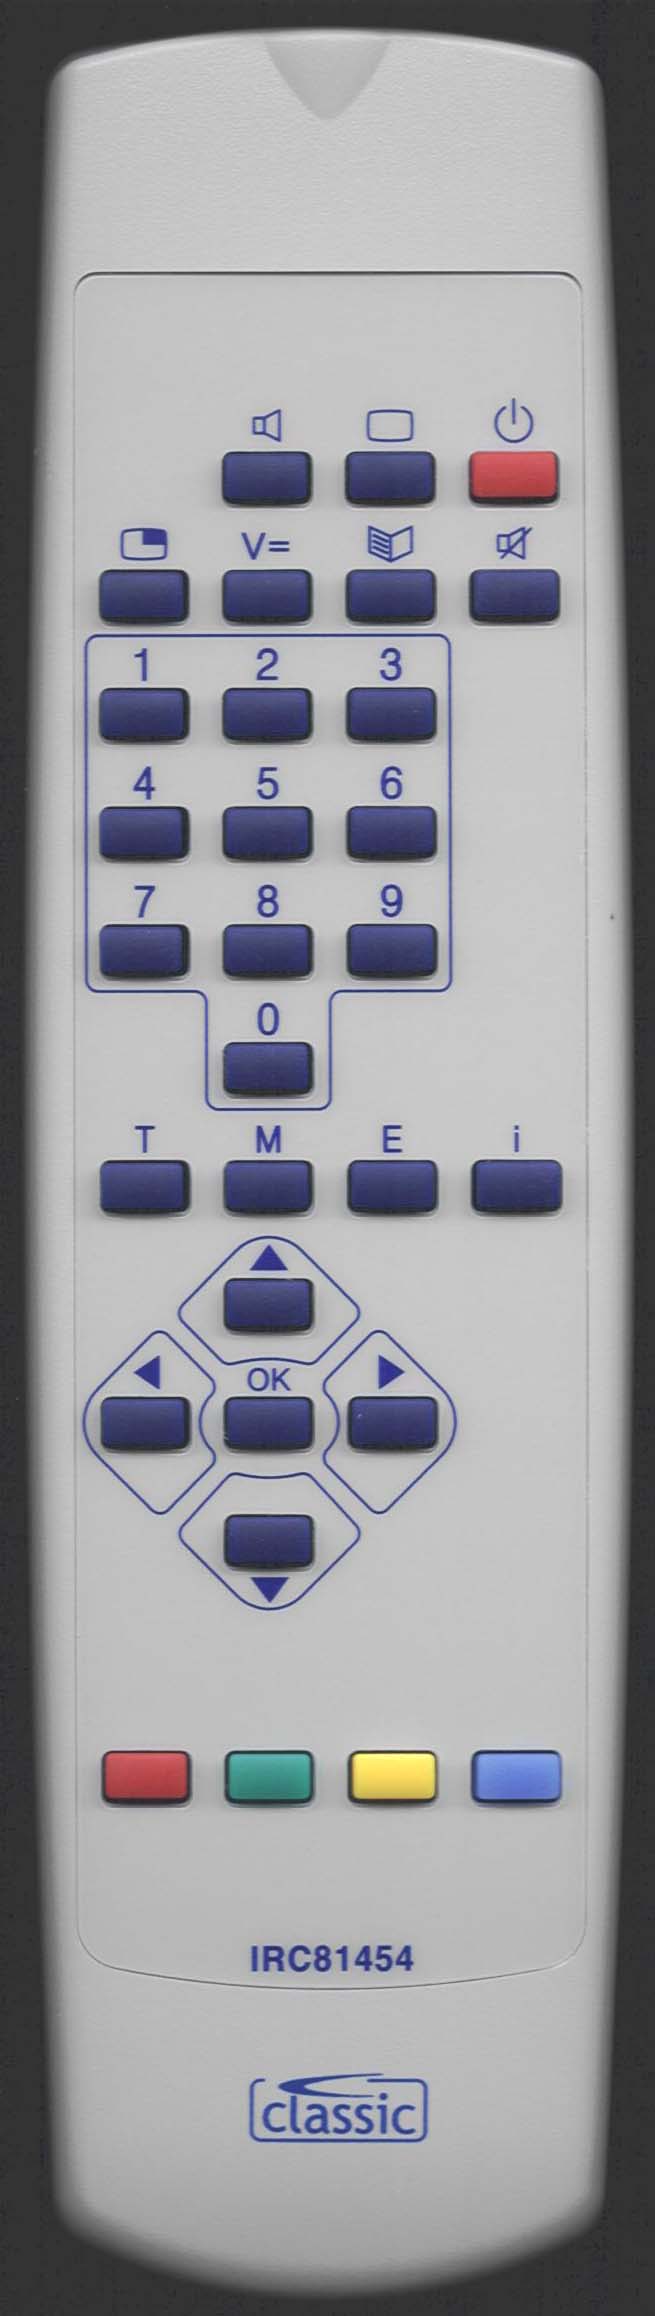 Loewe ARCADA 8784ZP Remote Control